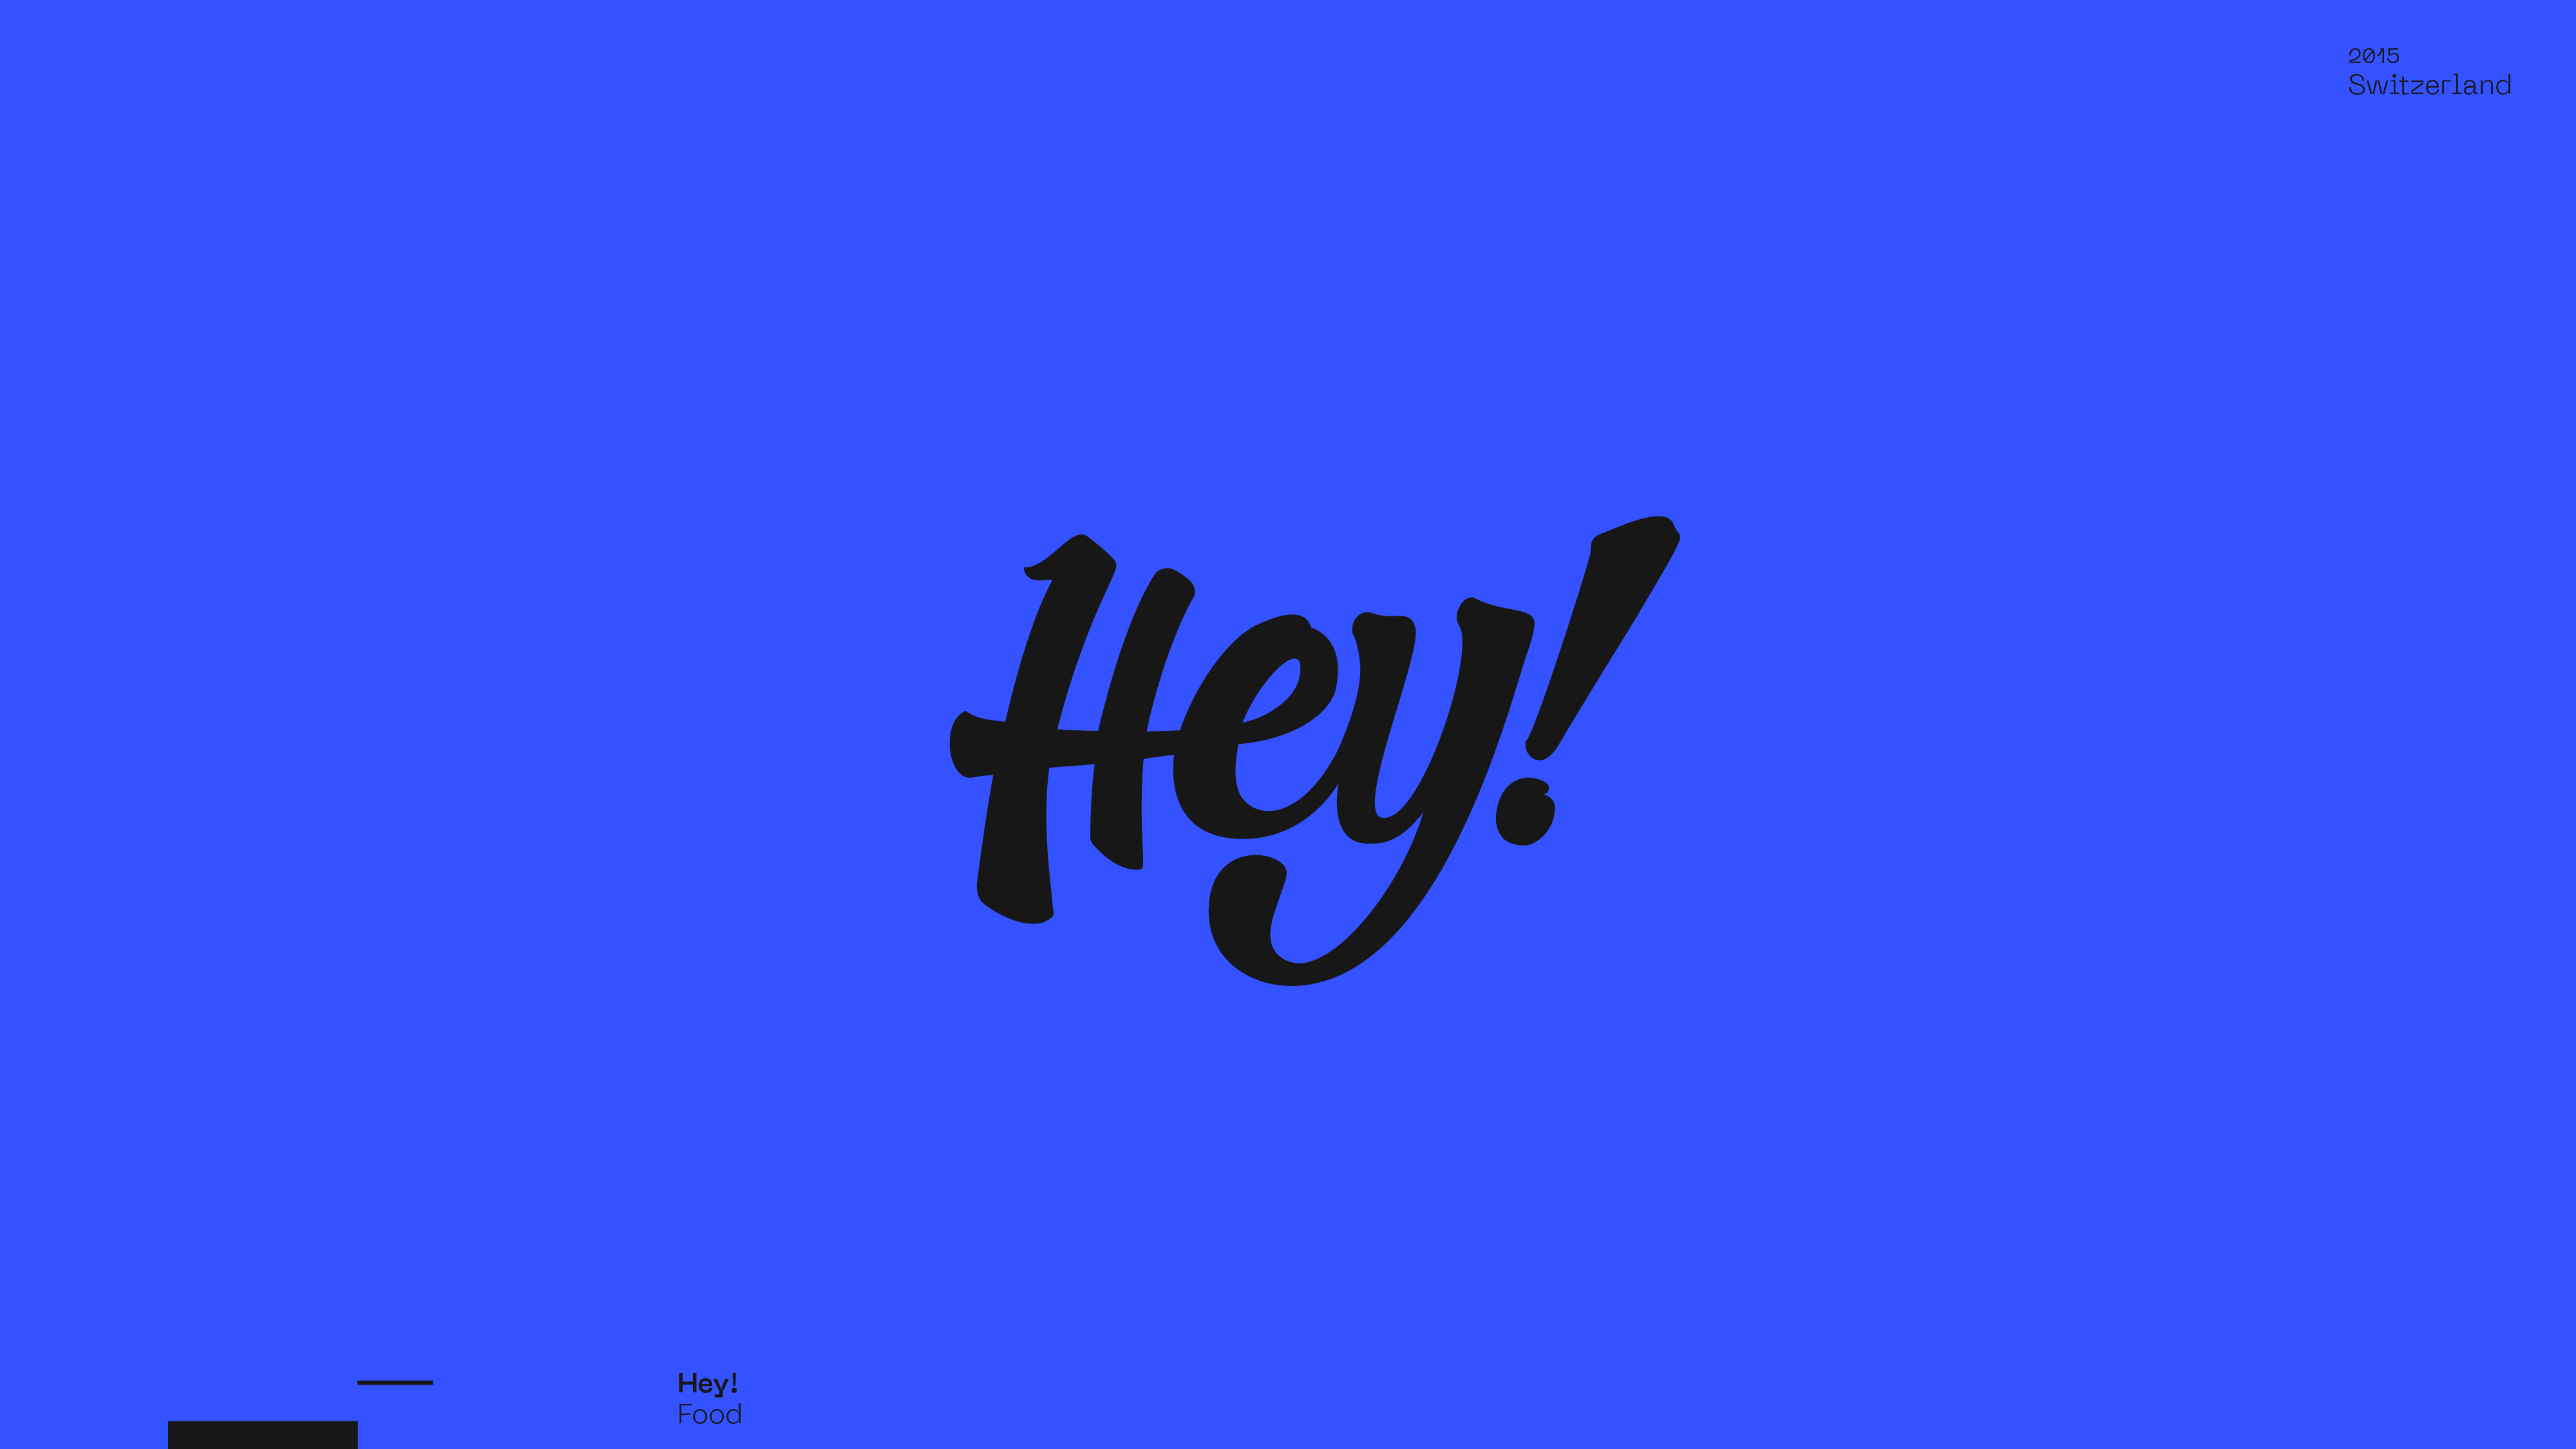 Guapo Design Studio by Esteban Ibarra Logofolio — Hey!